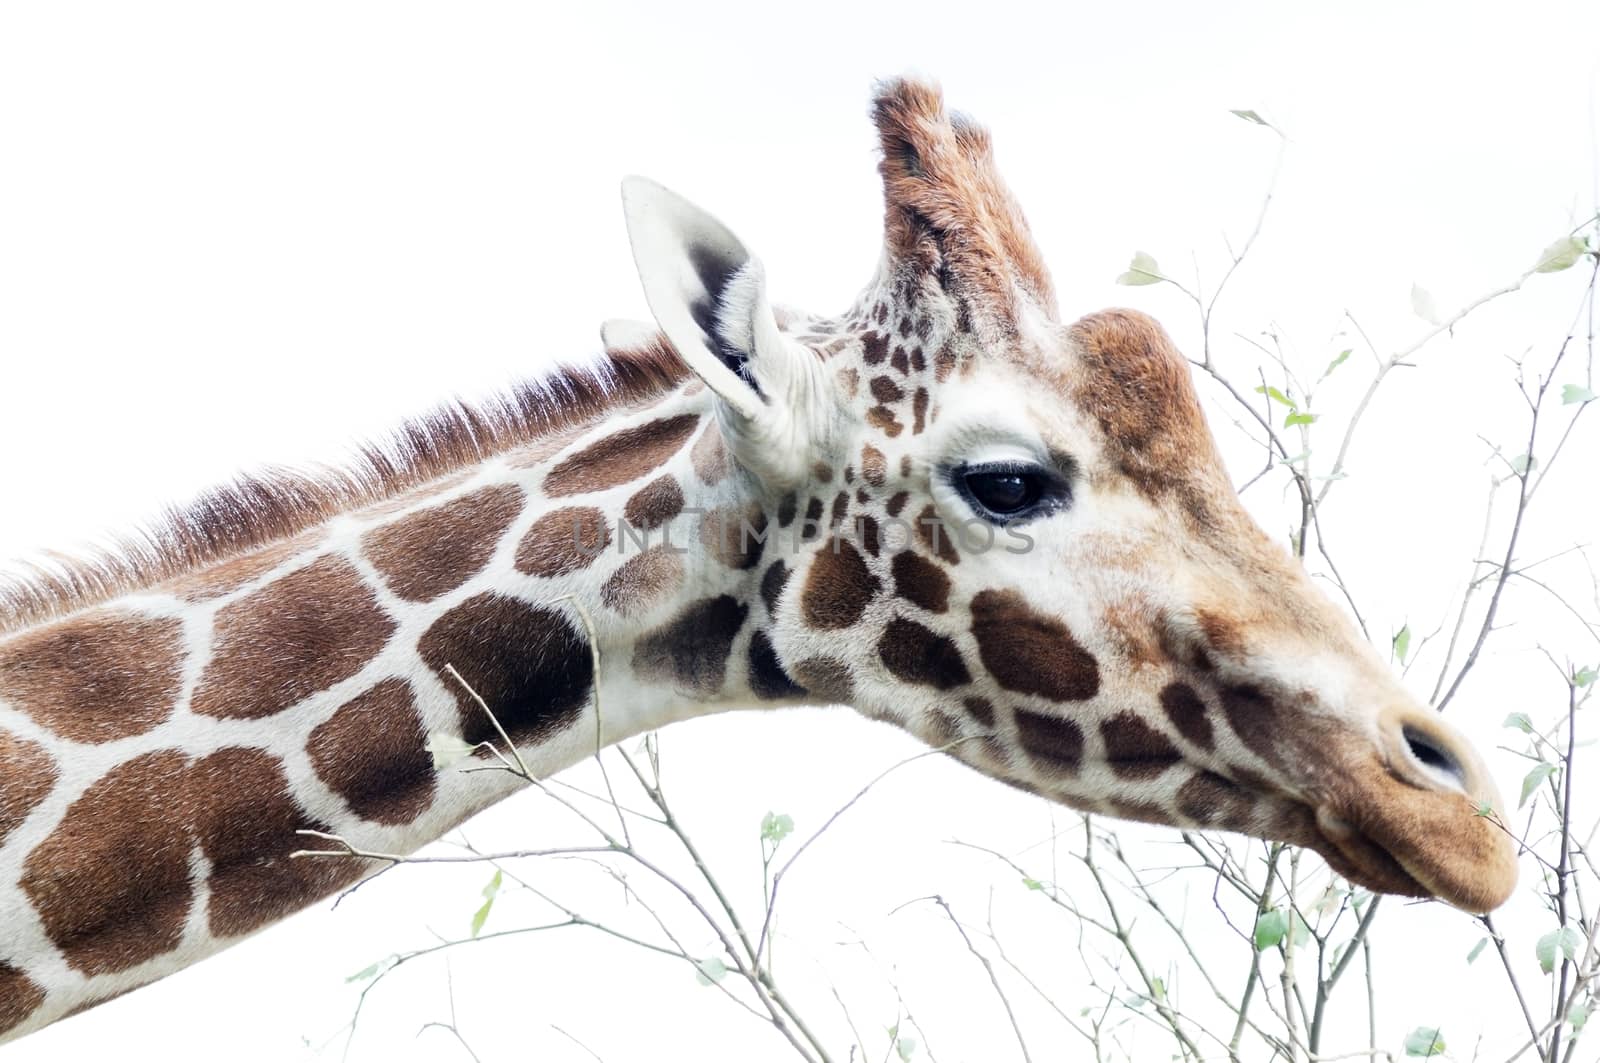 Giraffe eating by kmwphotography